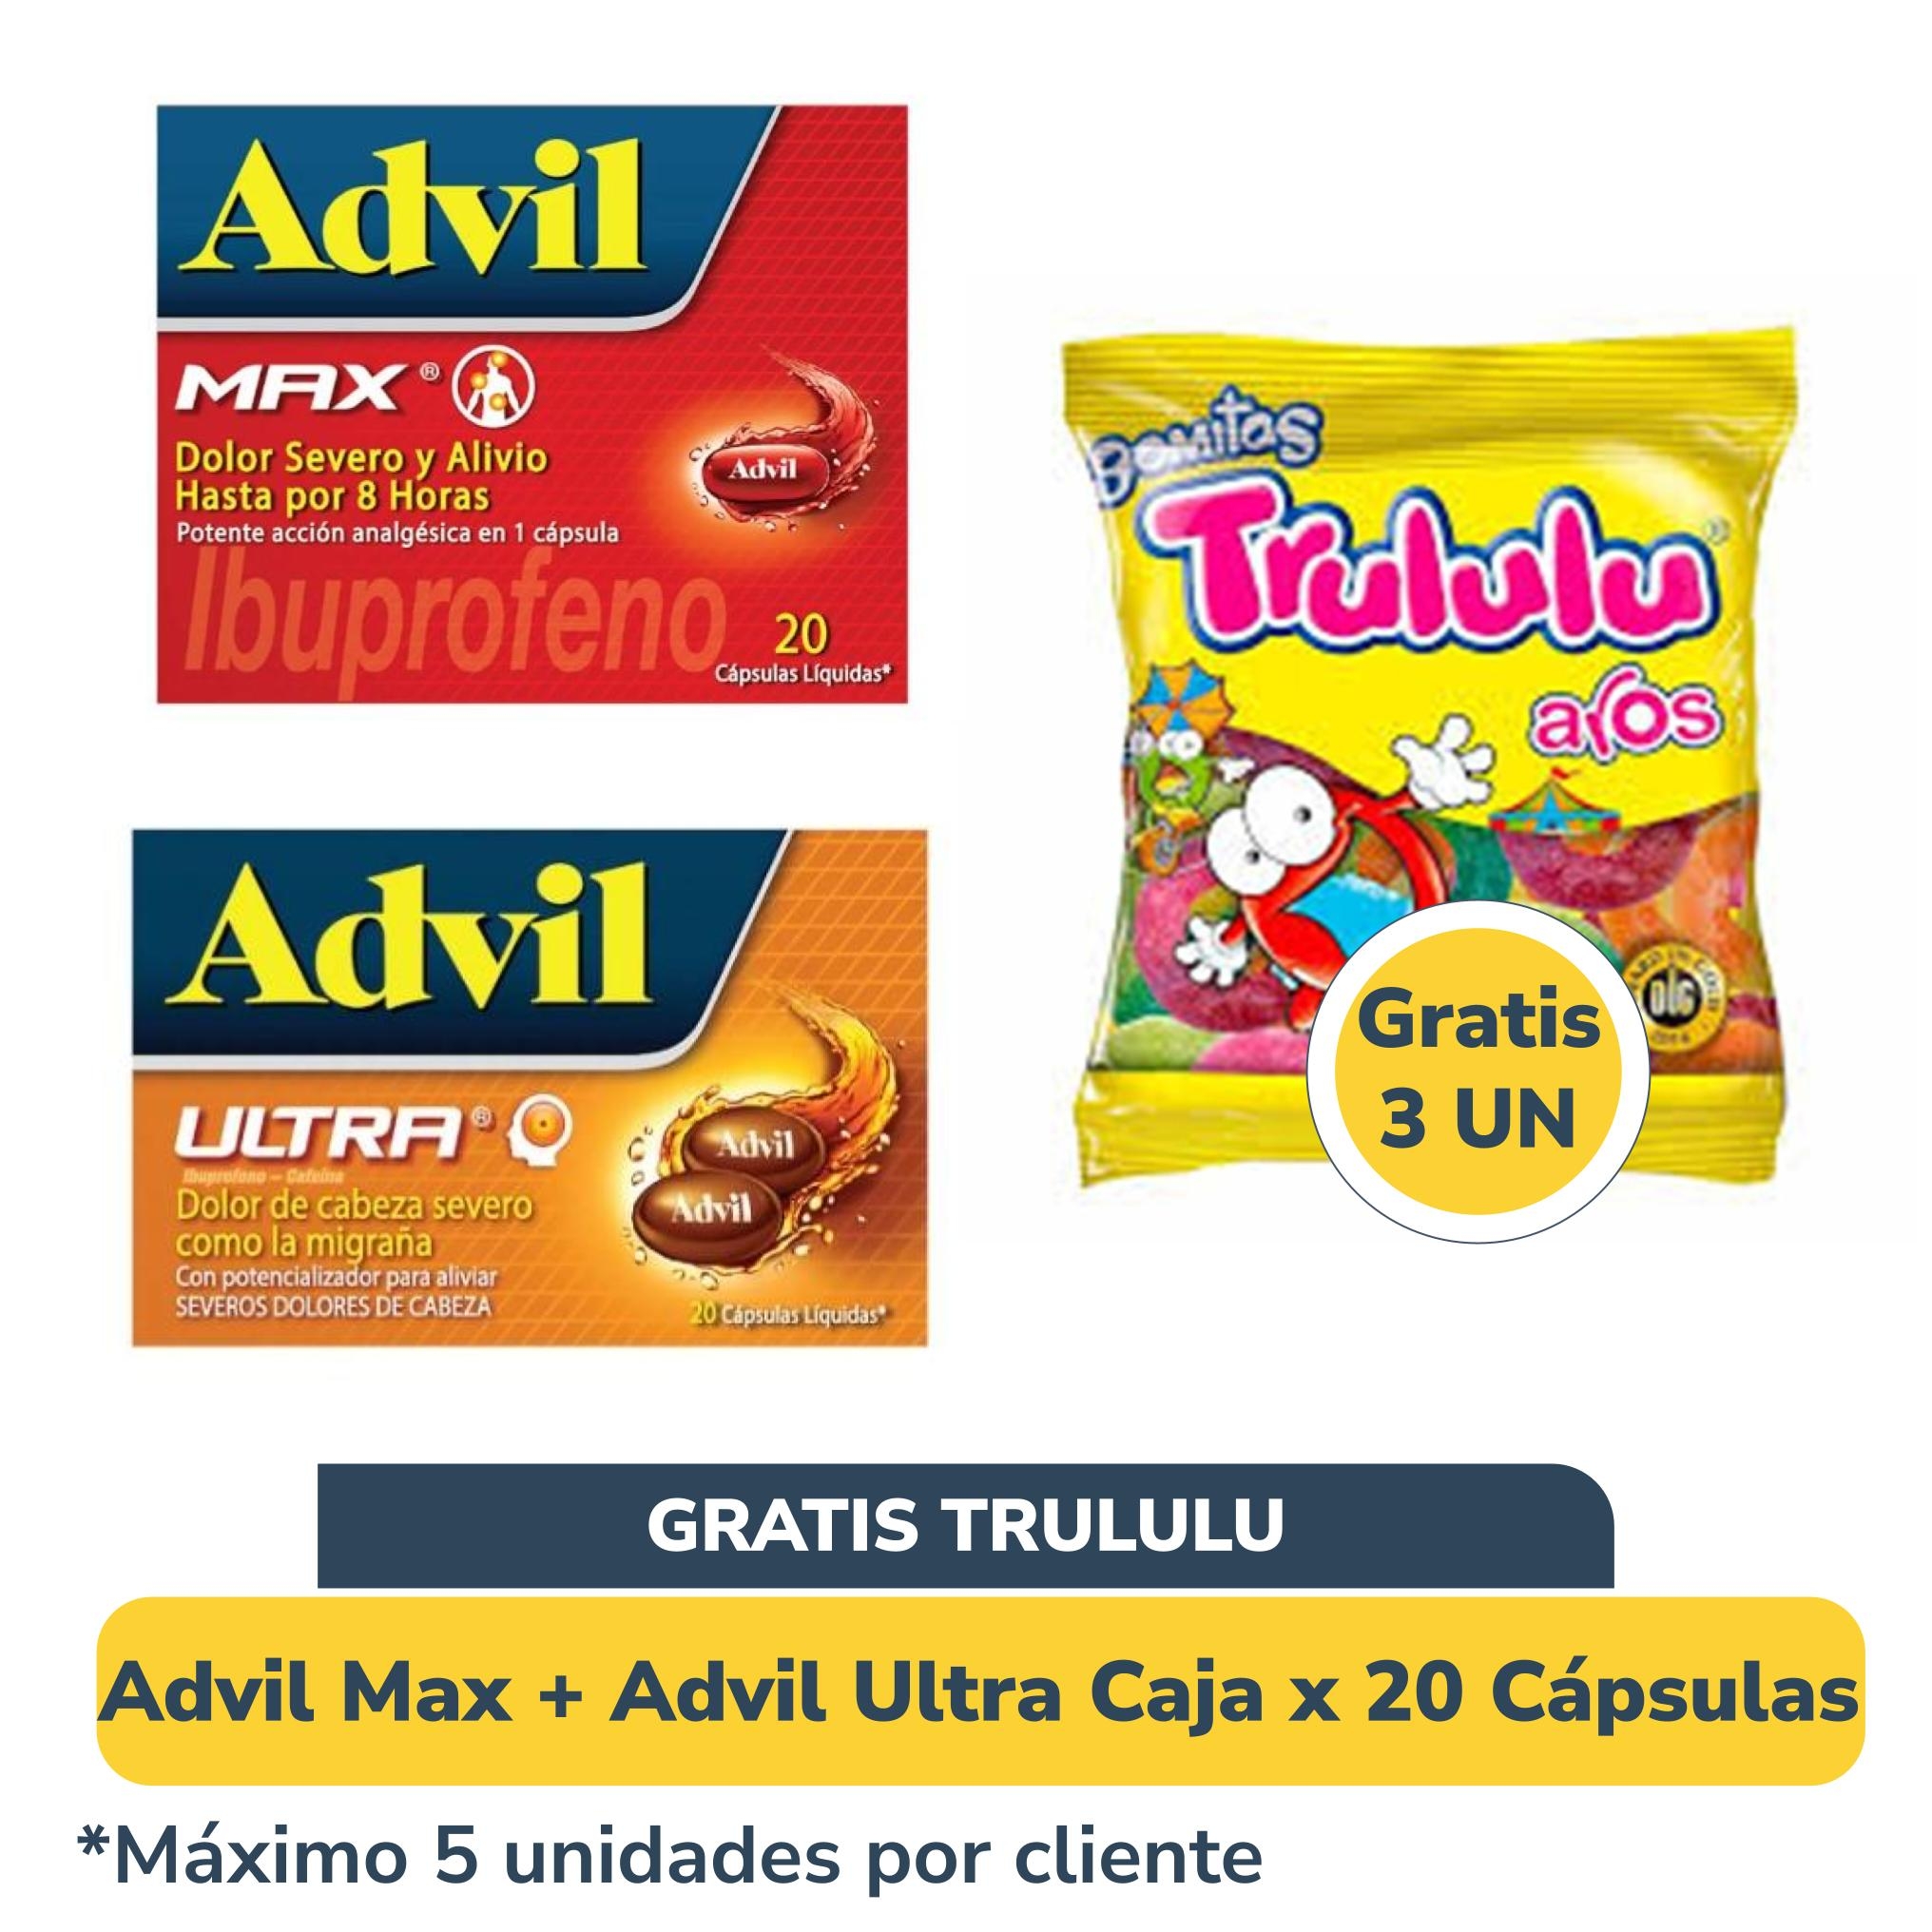 Lleve Advil Max + Advil Ultra Caja x 20 Cápsulas Gratis 3 Un Gomas Trululu Bolsa x 90 gr